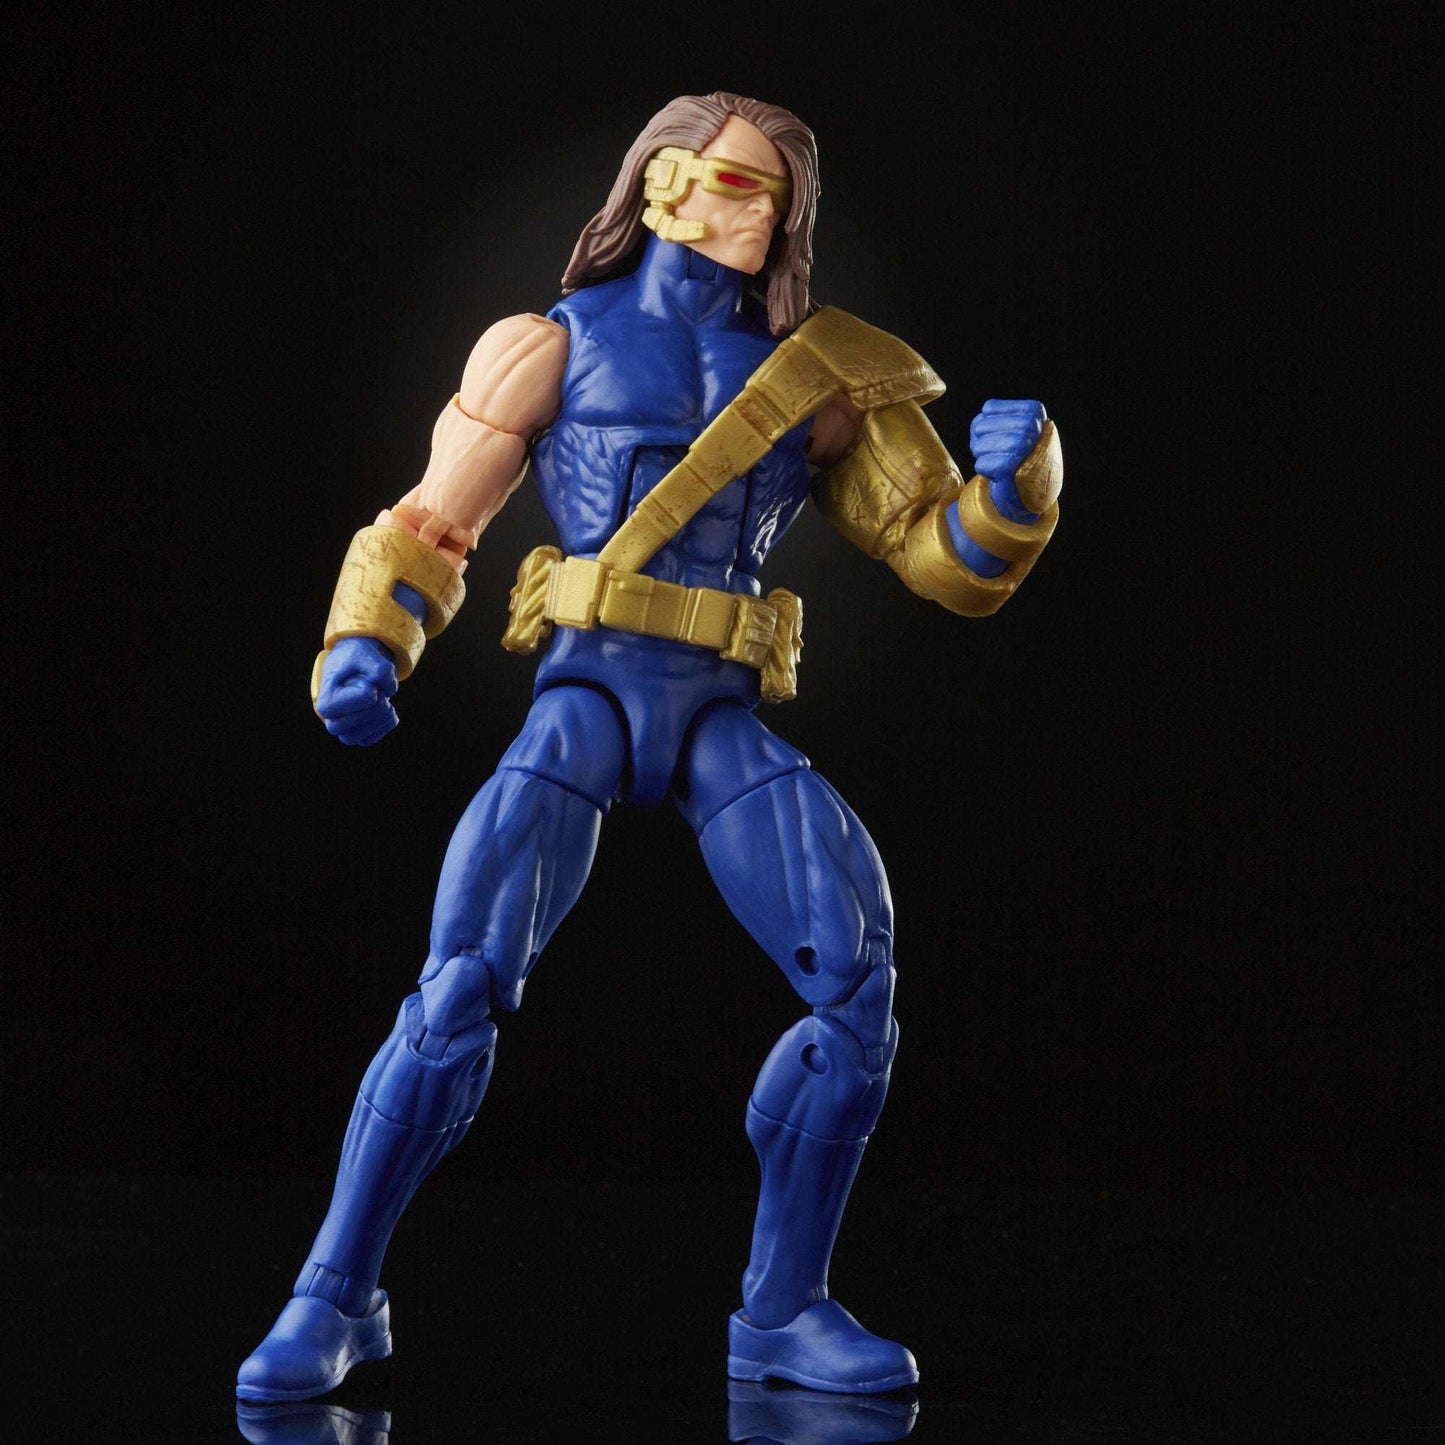 Hasbro Marvel Legends Series X-men Age of Apocalypse Cyclops figure in an action pose